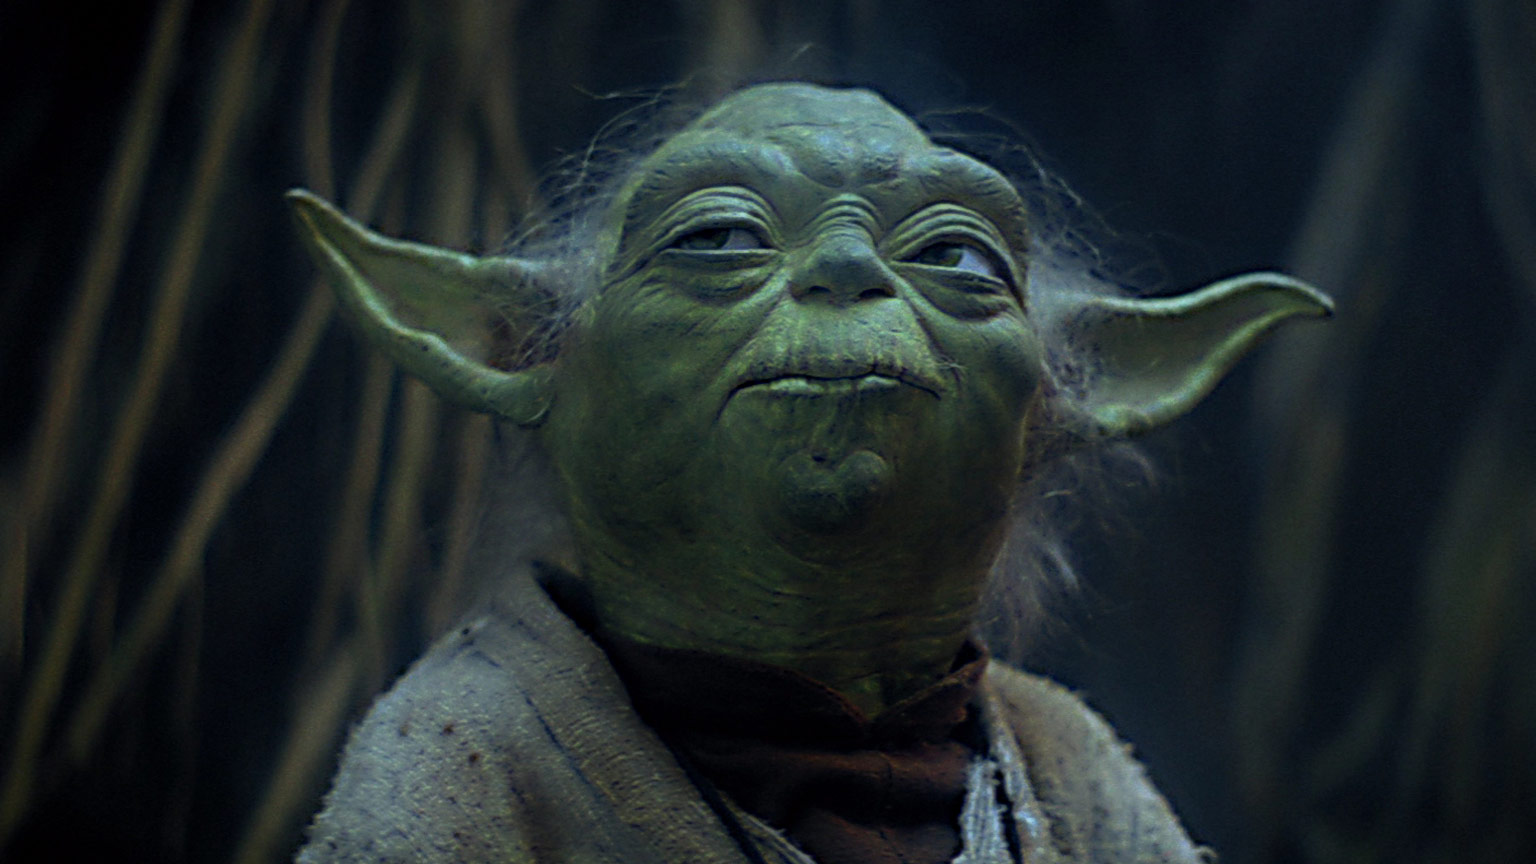 Every Yoda 'Hmmm' ever